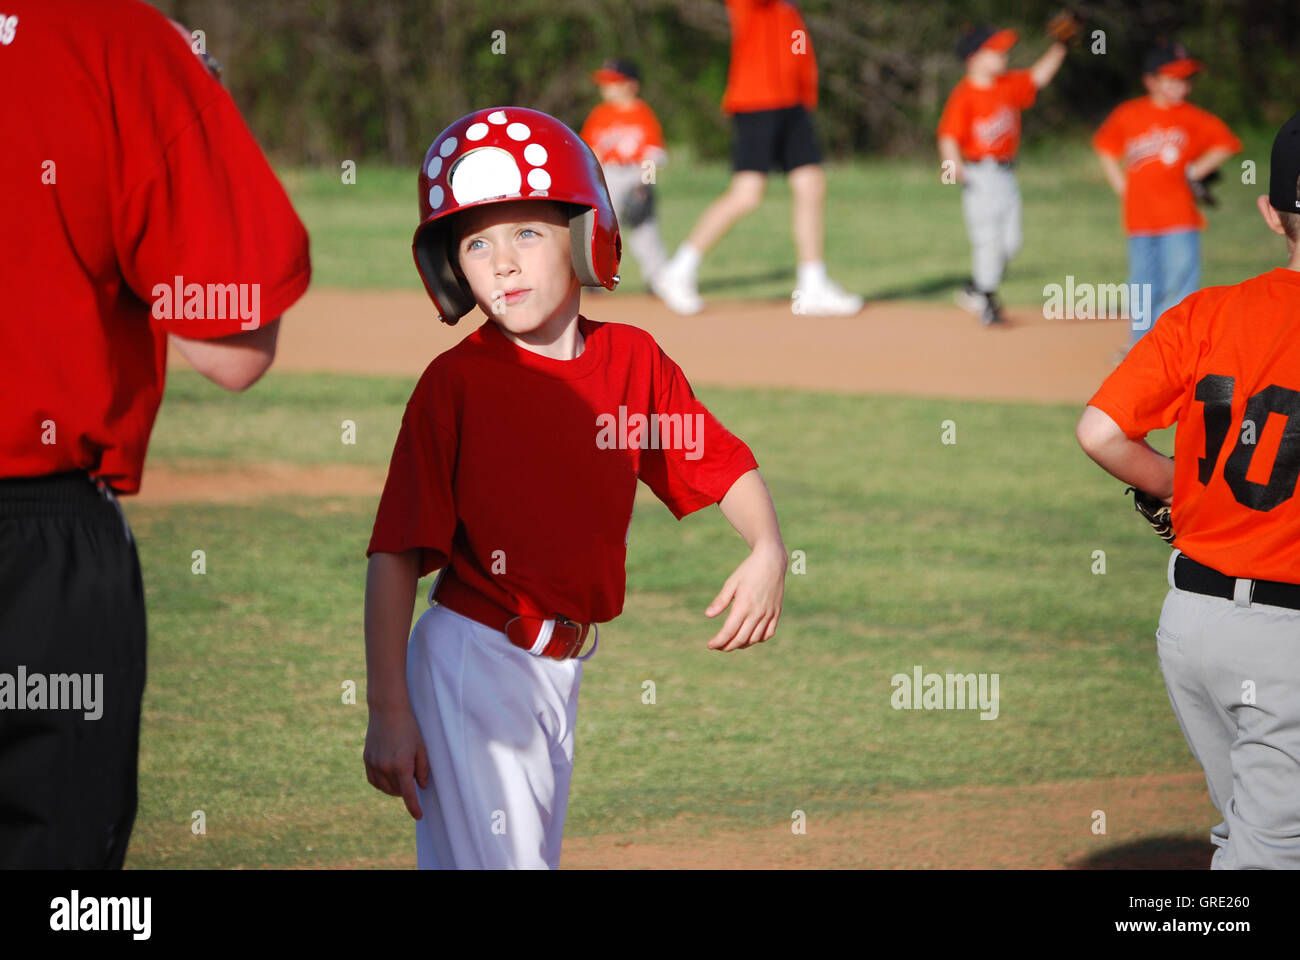 1,106 Cute Boy Baseball Uniform Images, Stock Photos & Vectors